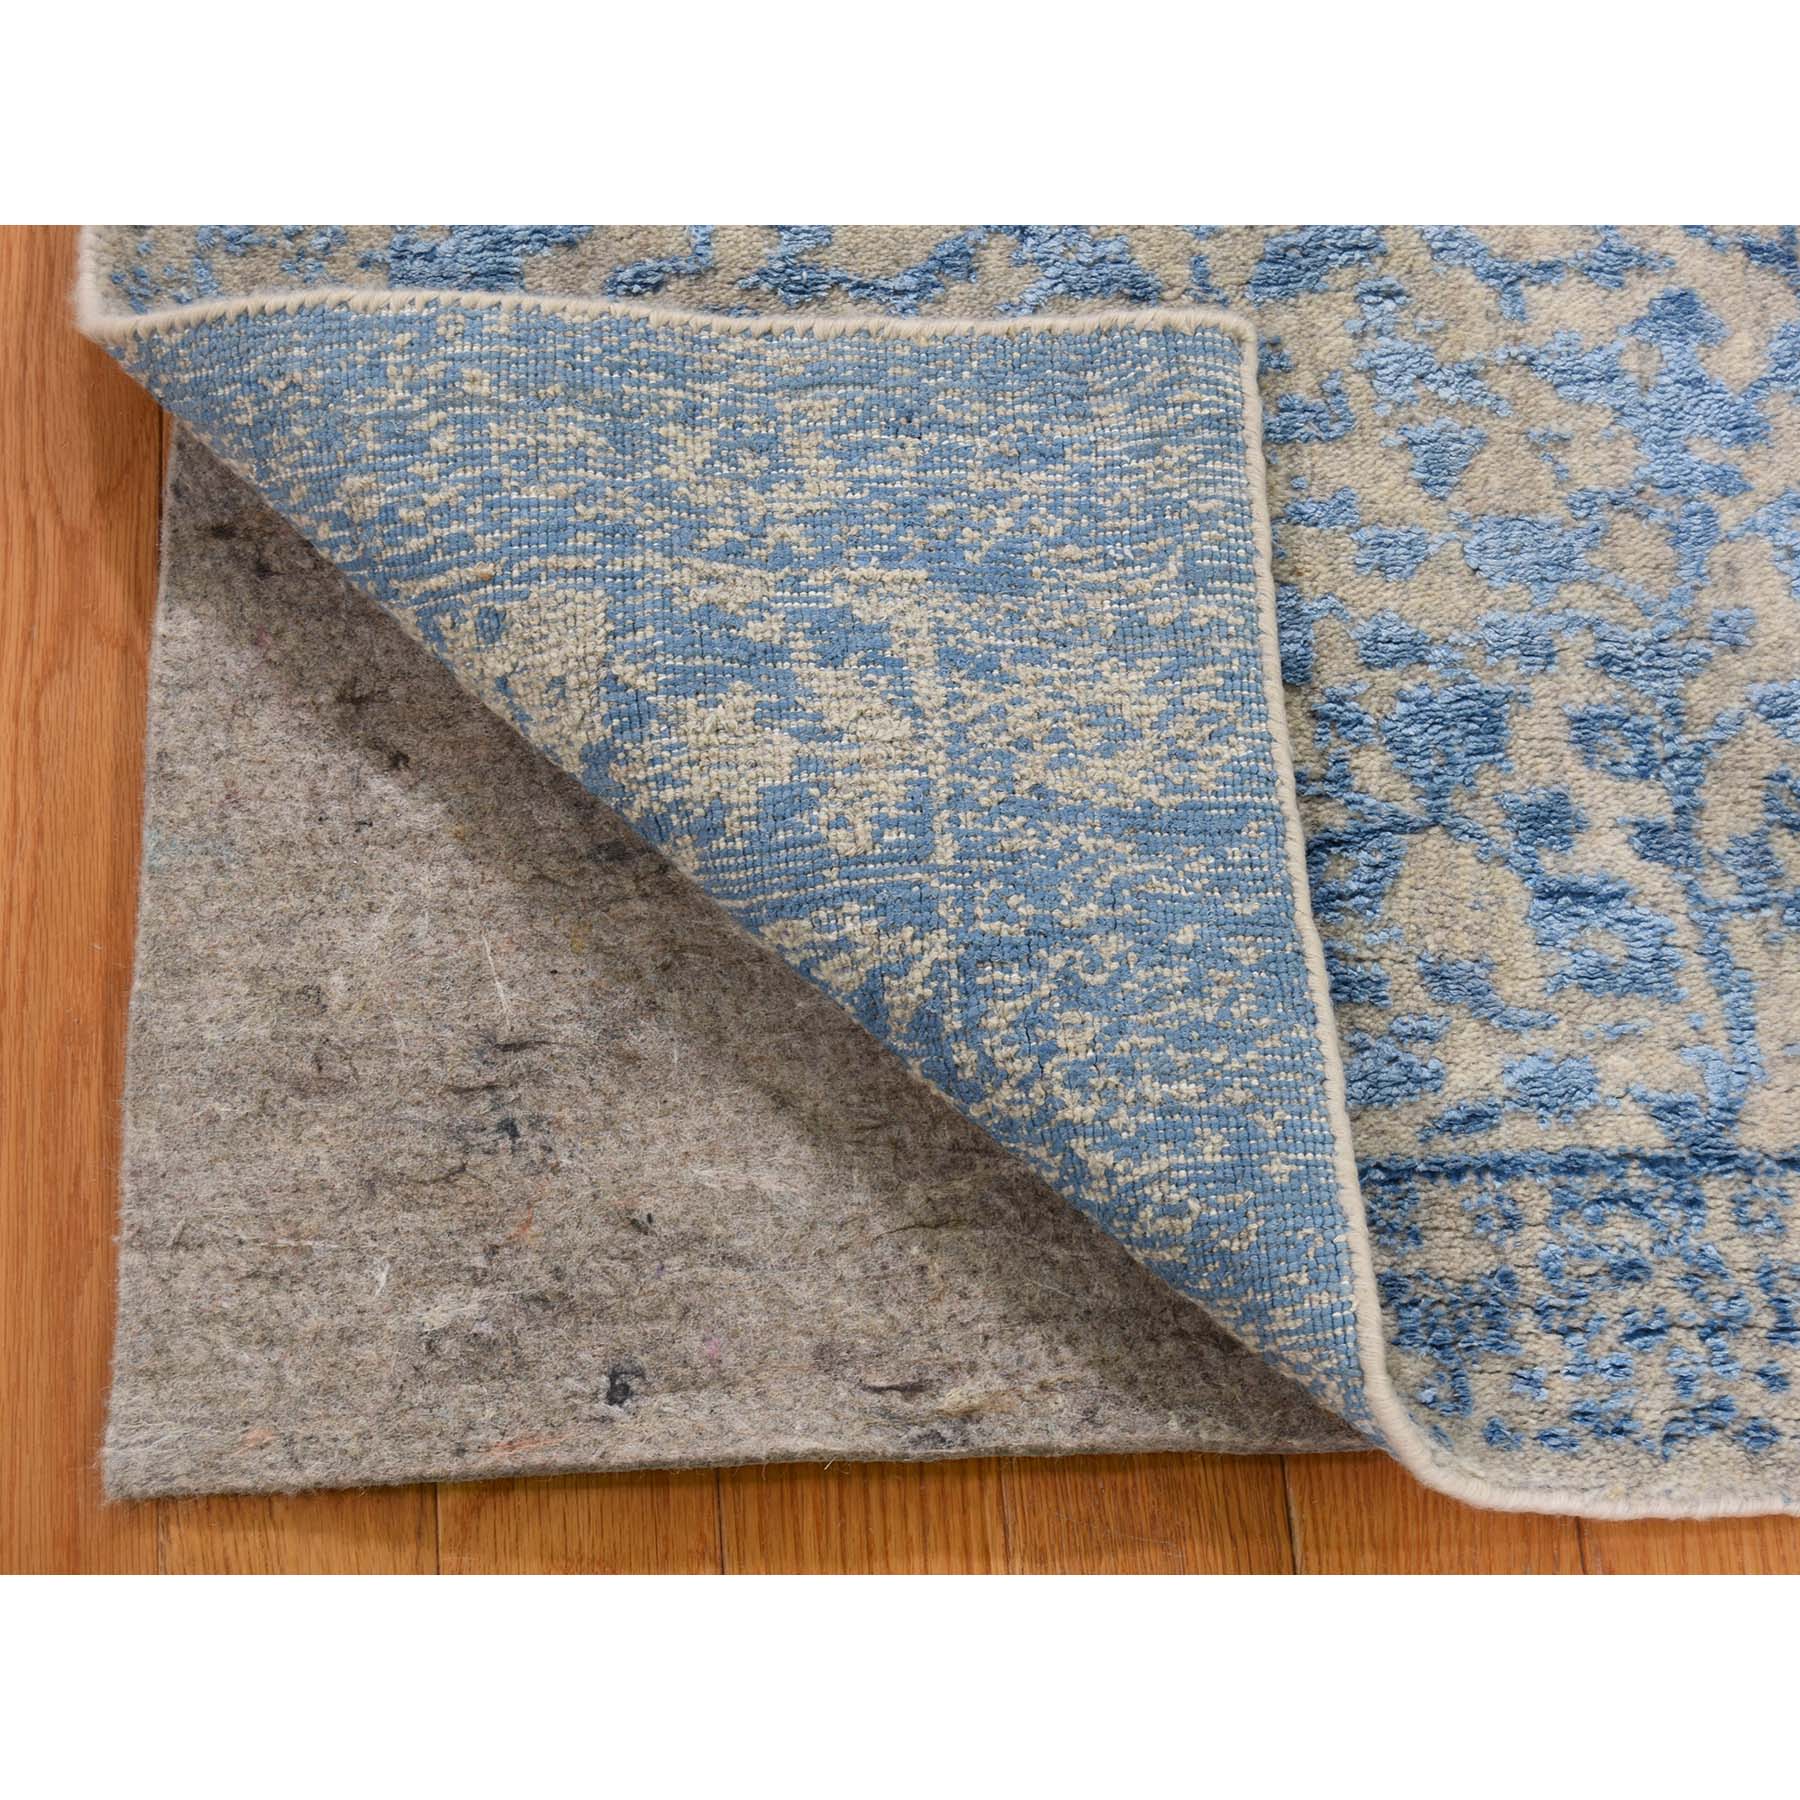 2-6 x10-1  Jacquard Hand-Loomed Blue Broken Cypress Tree Design Silken Thick And Plush Runner Oriental Rug 